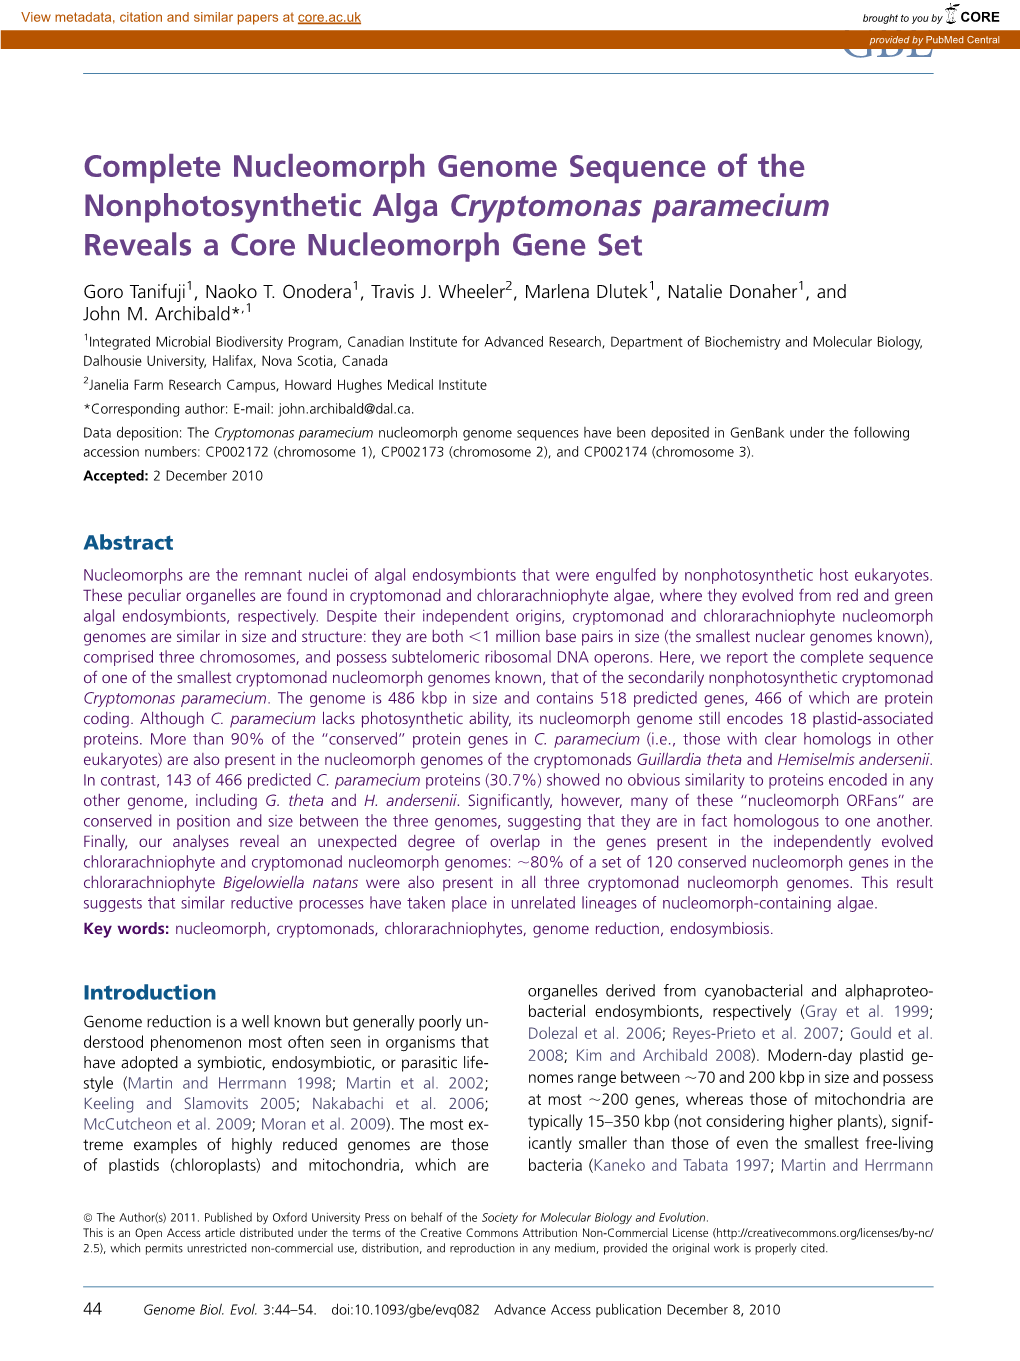 Complete Nucleomorph Genome Sequence of the Nonphotosynthetic Alga Cryptomonas Paramecium Reveals a Core Nucleomorph Gene Set